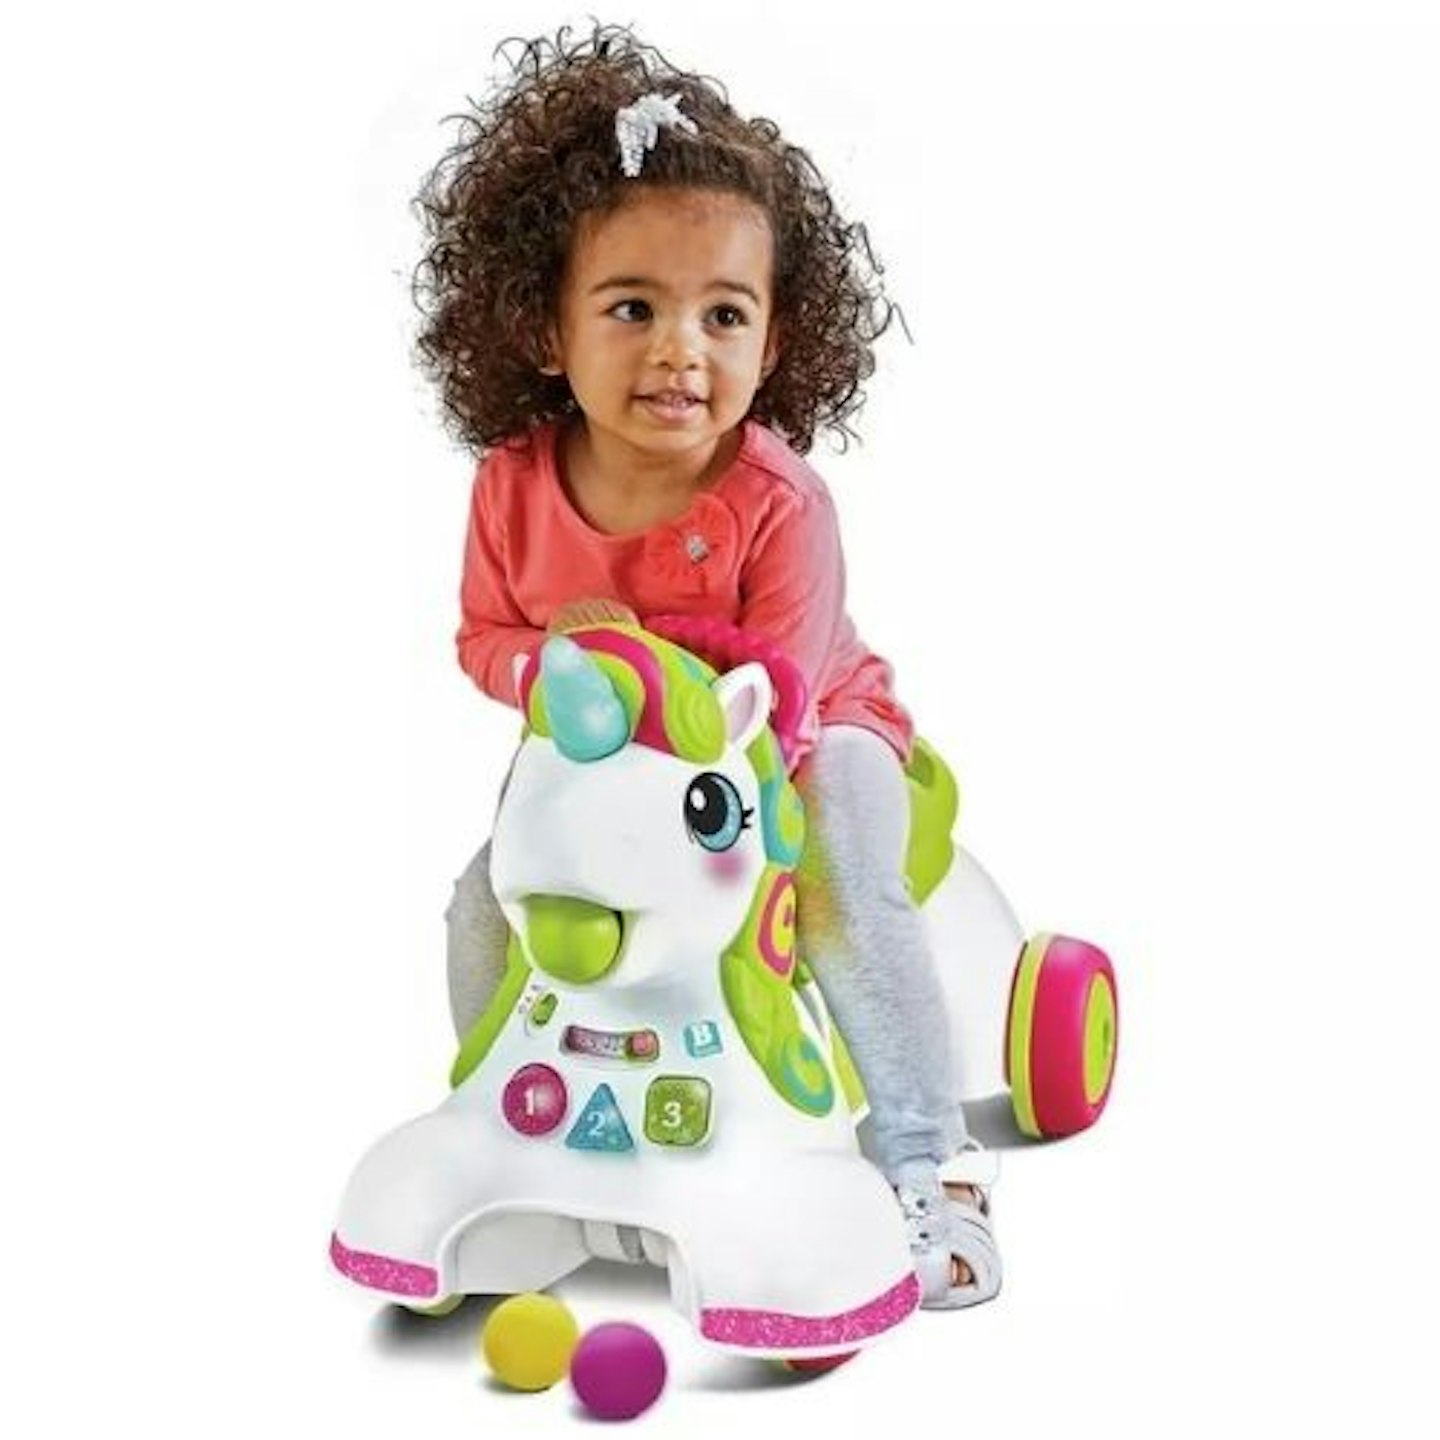 Infantino 3-in-1 Sit, Walk & Ride Unicorn